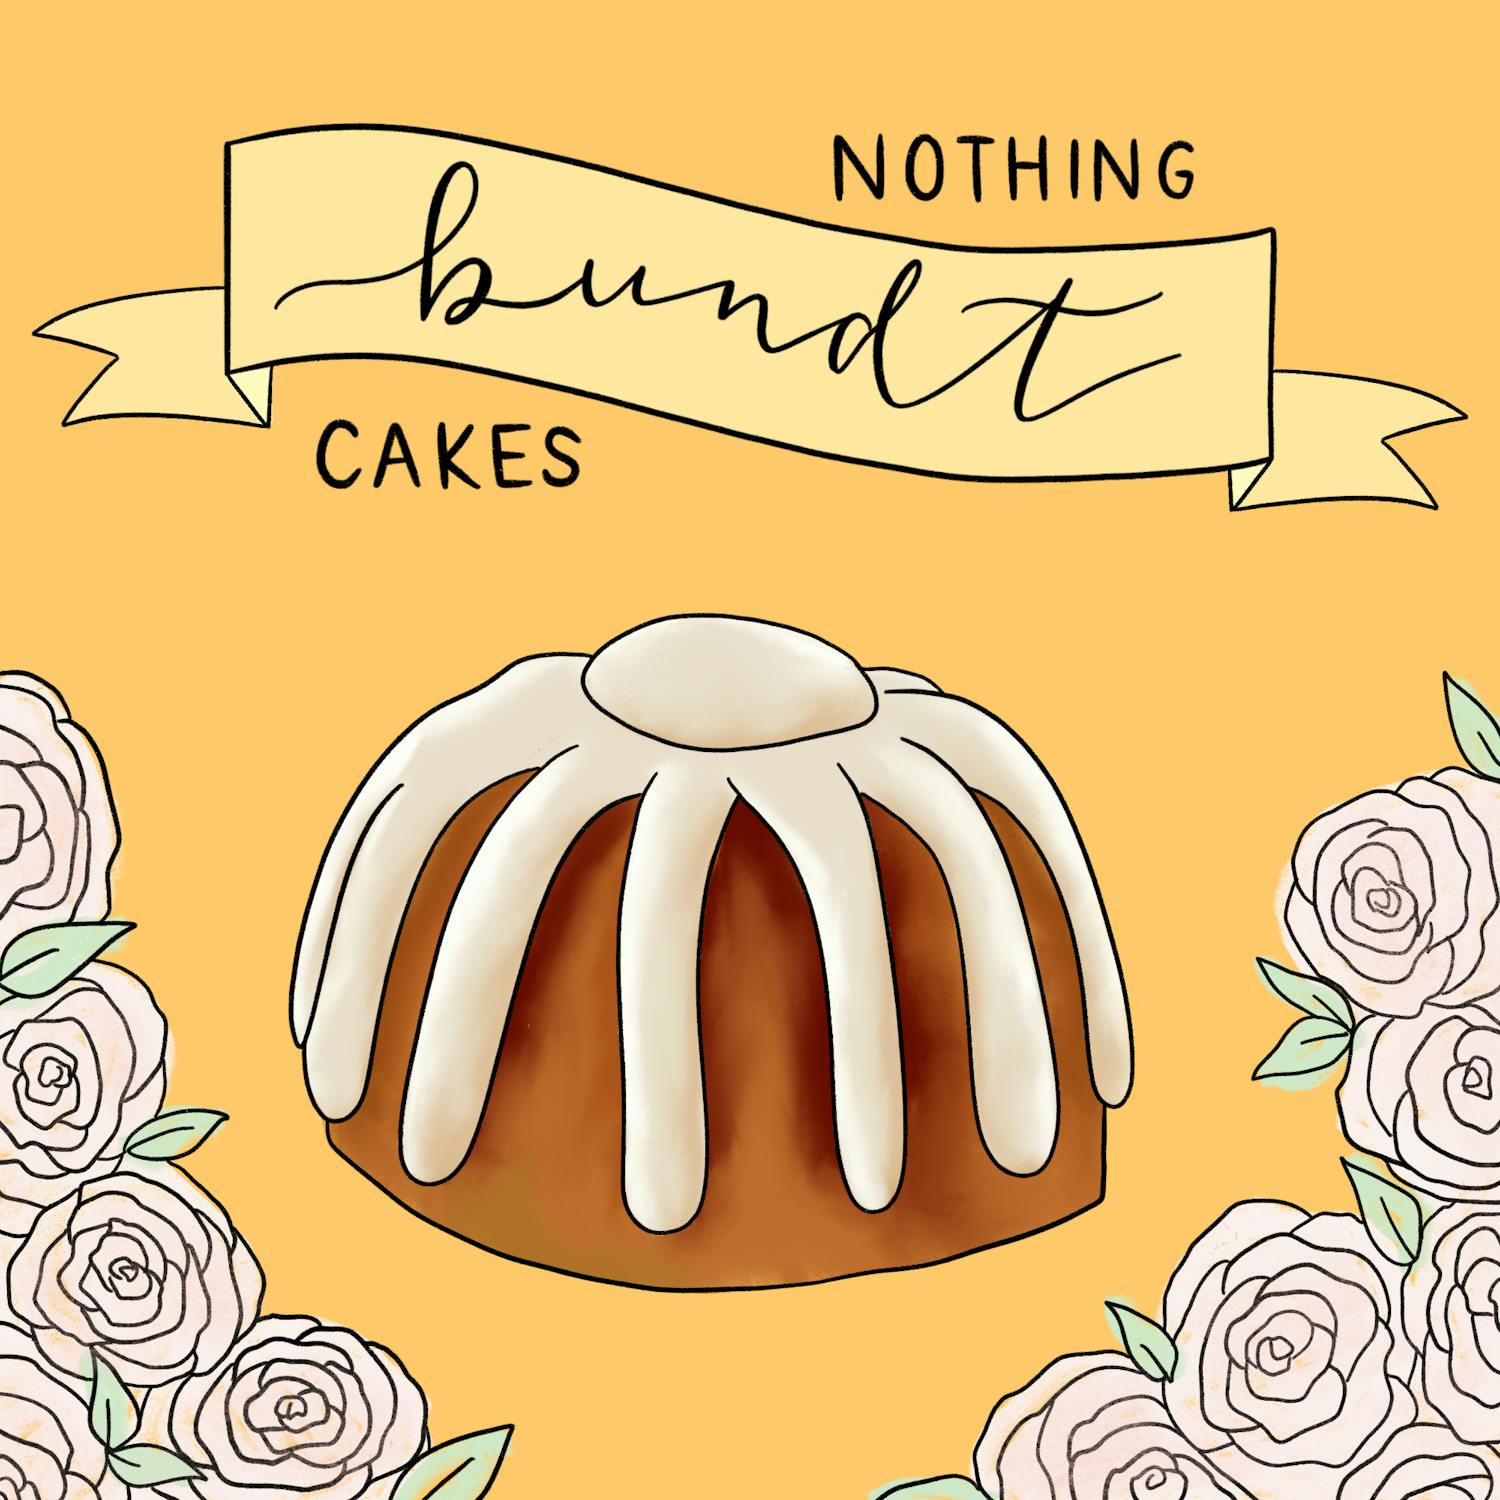 Nothing Bundt Cakes (Gainesville)